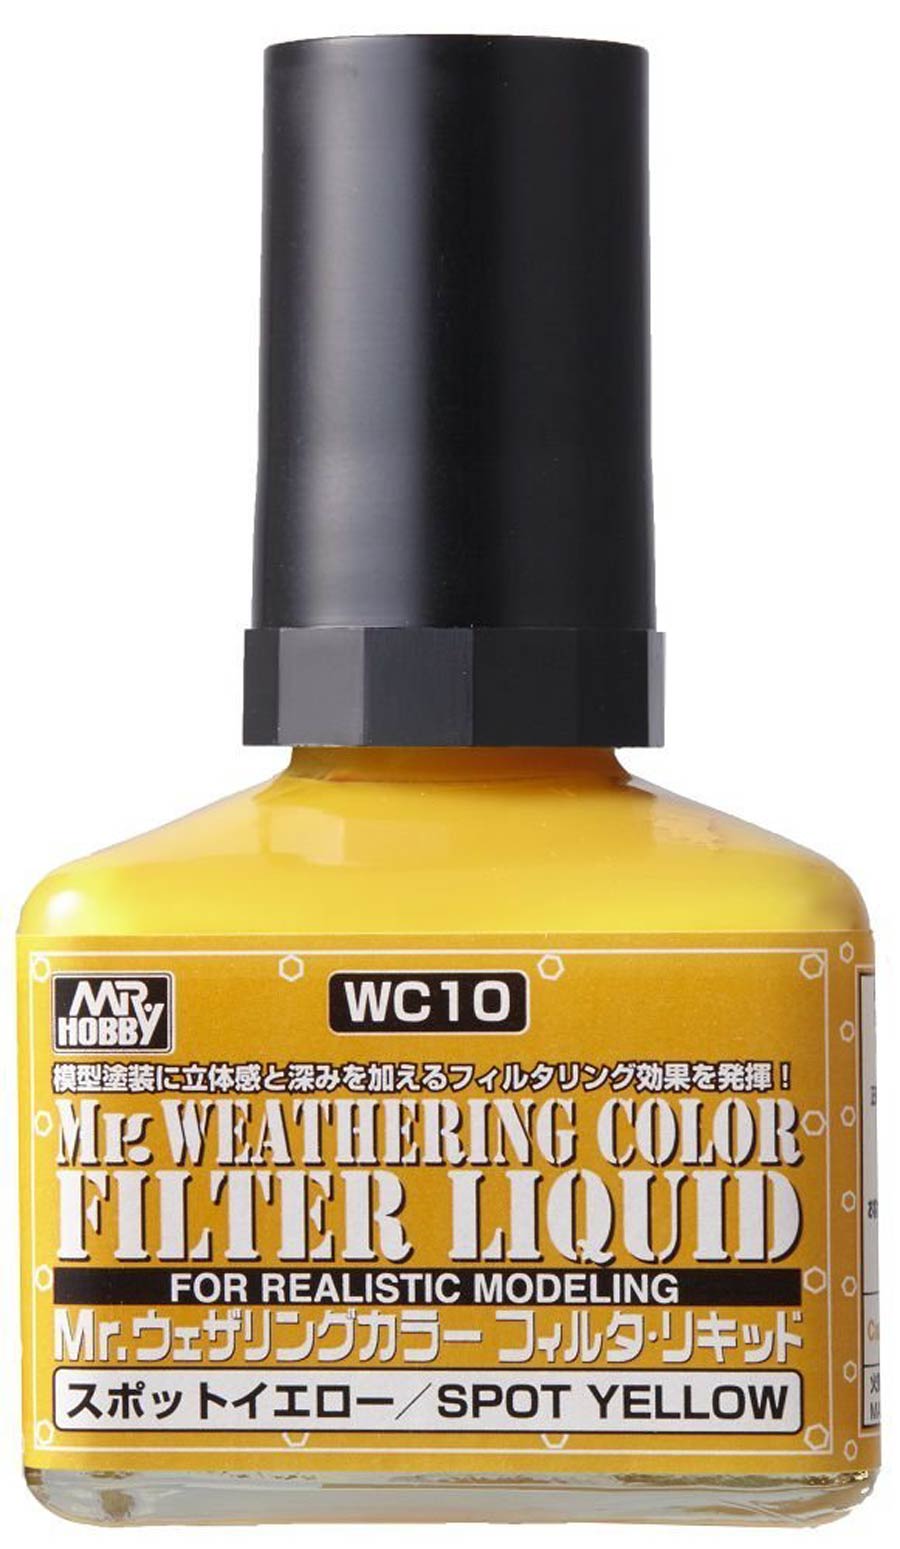 Mr. Weathering Color Paint - WC10 Filter Liquid Spot Yellow Bottle